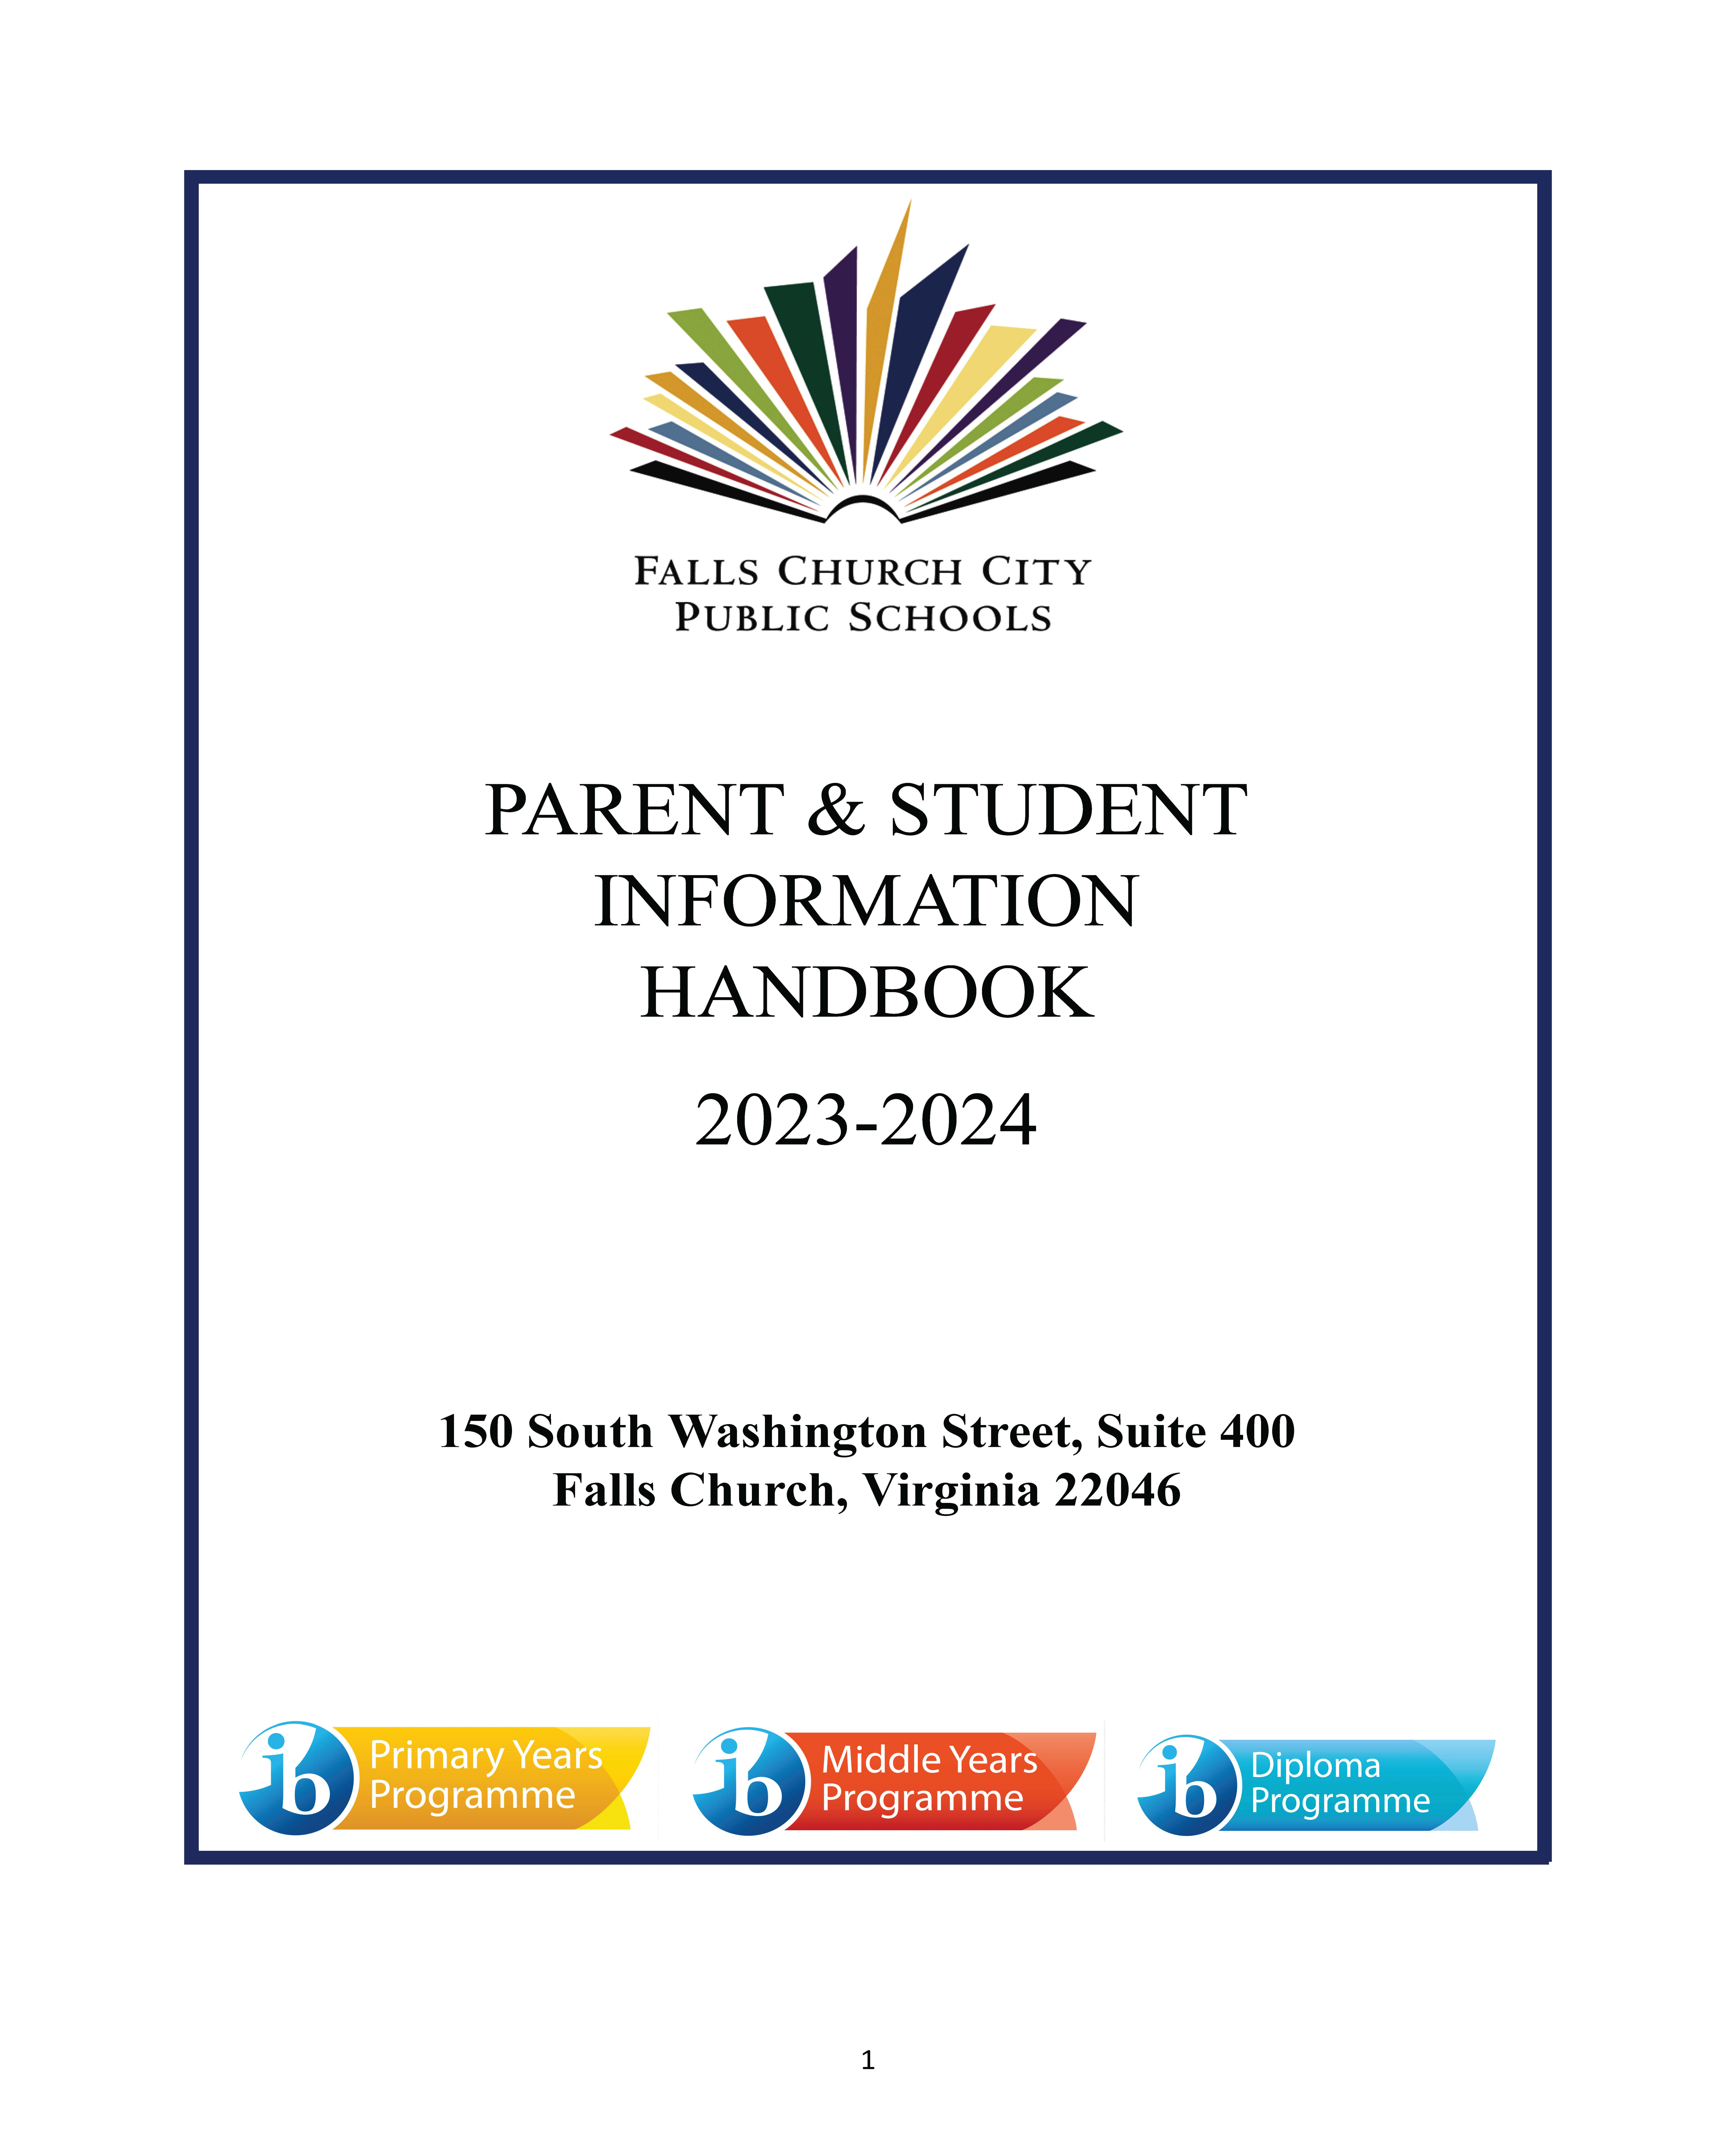 FCCPS Parent and Student Handbook 2023-2024